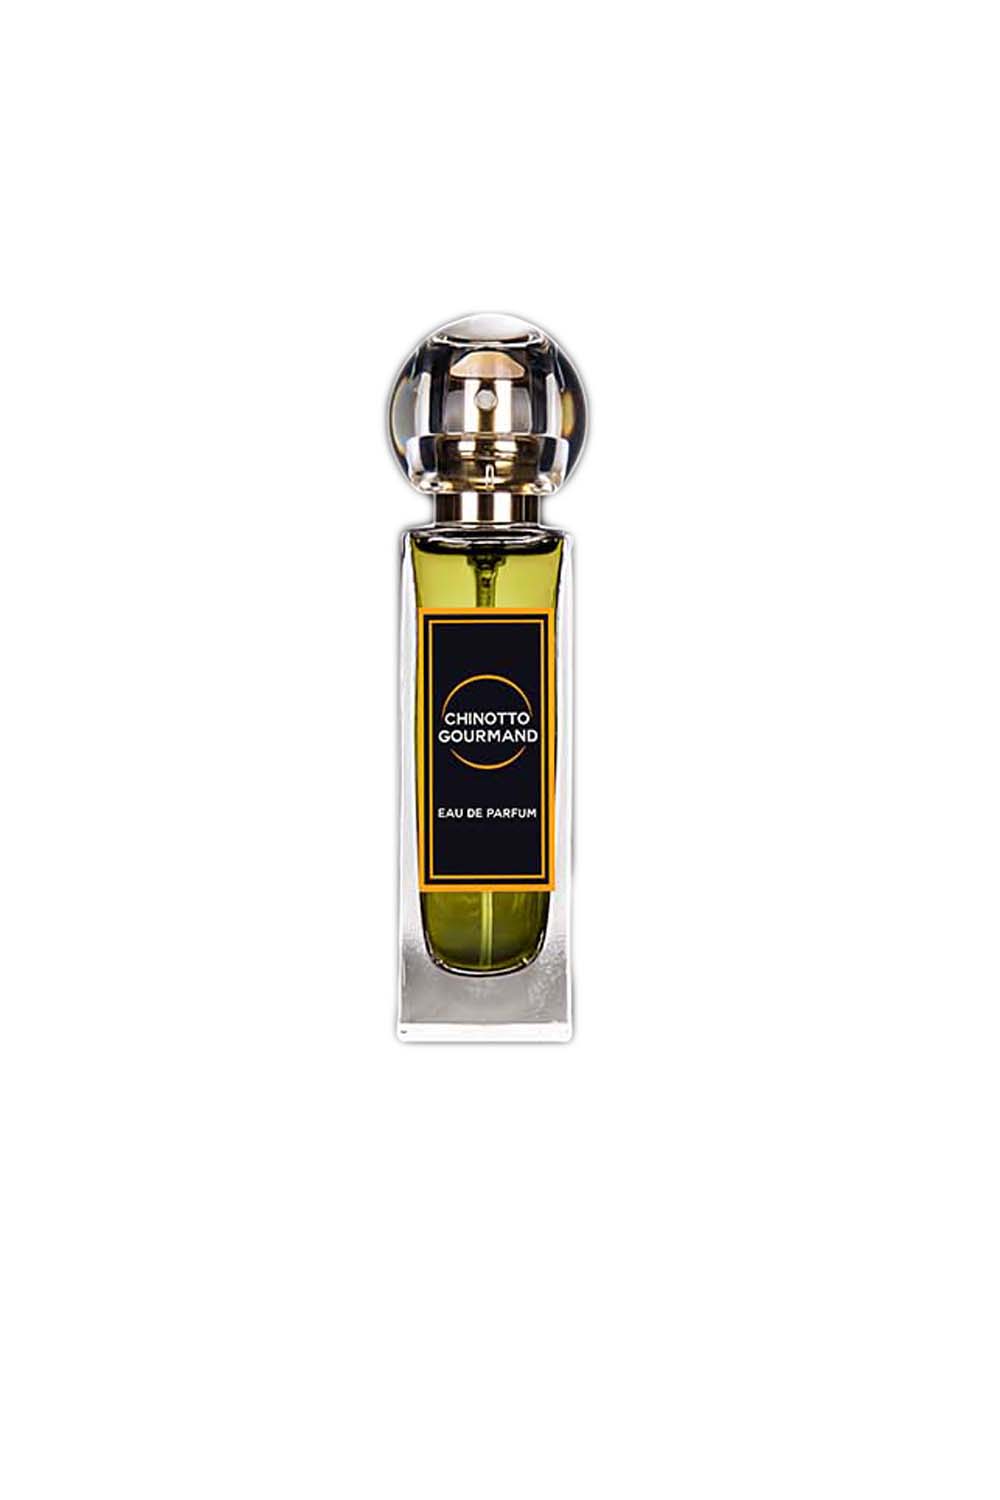 Chinotto Gourmand Eau de Parfum small size is joyful and energizing.